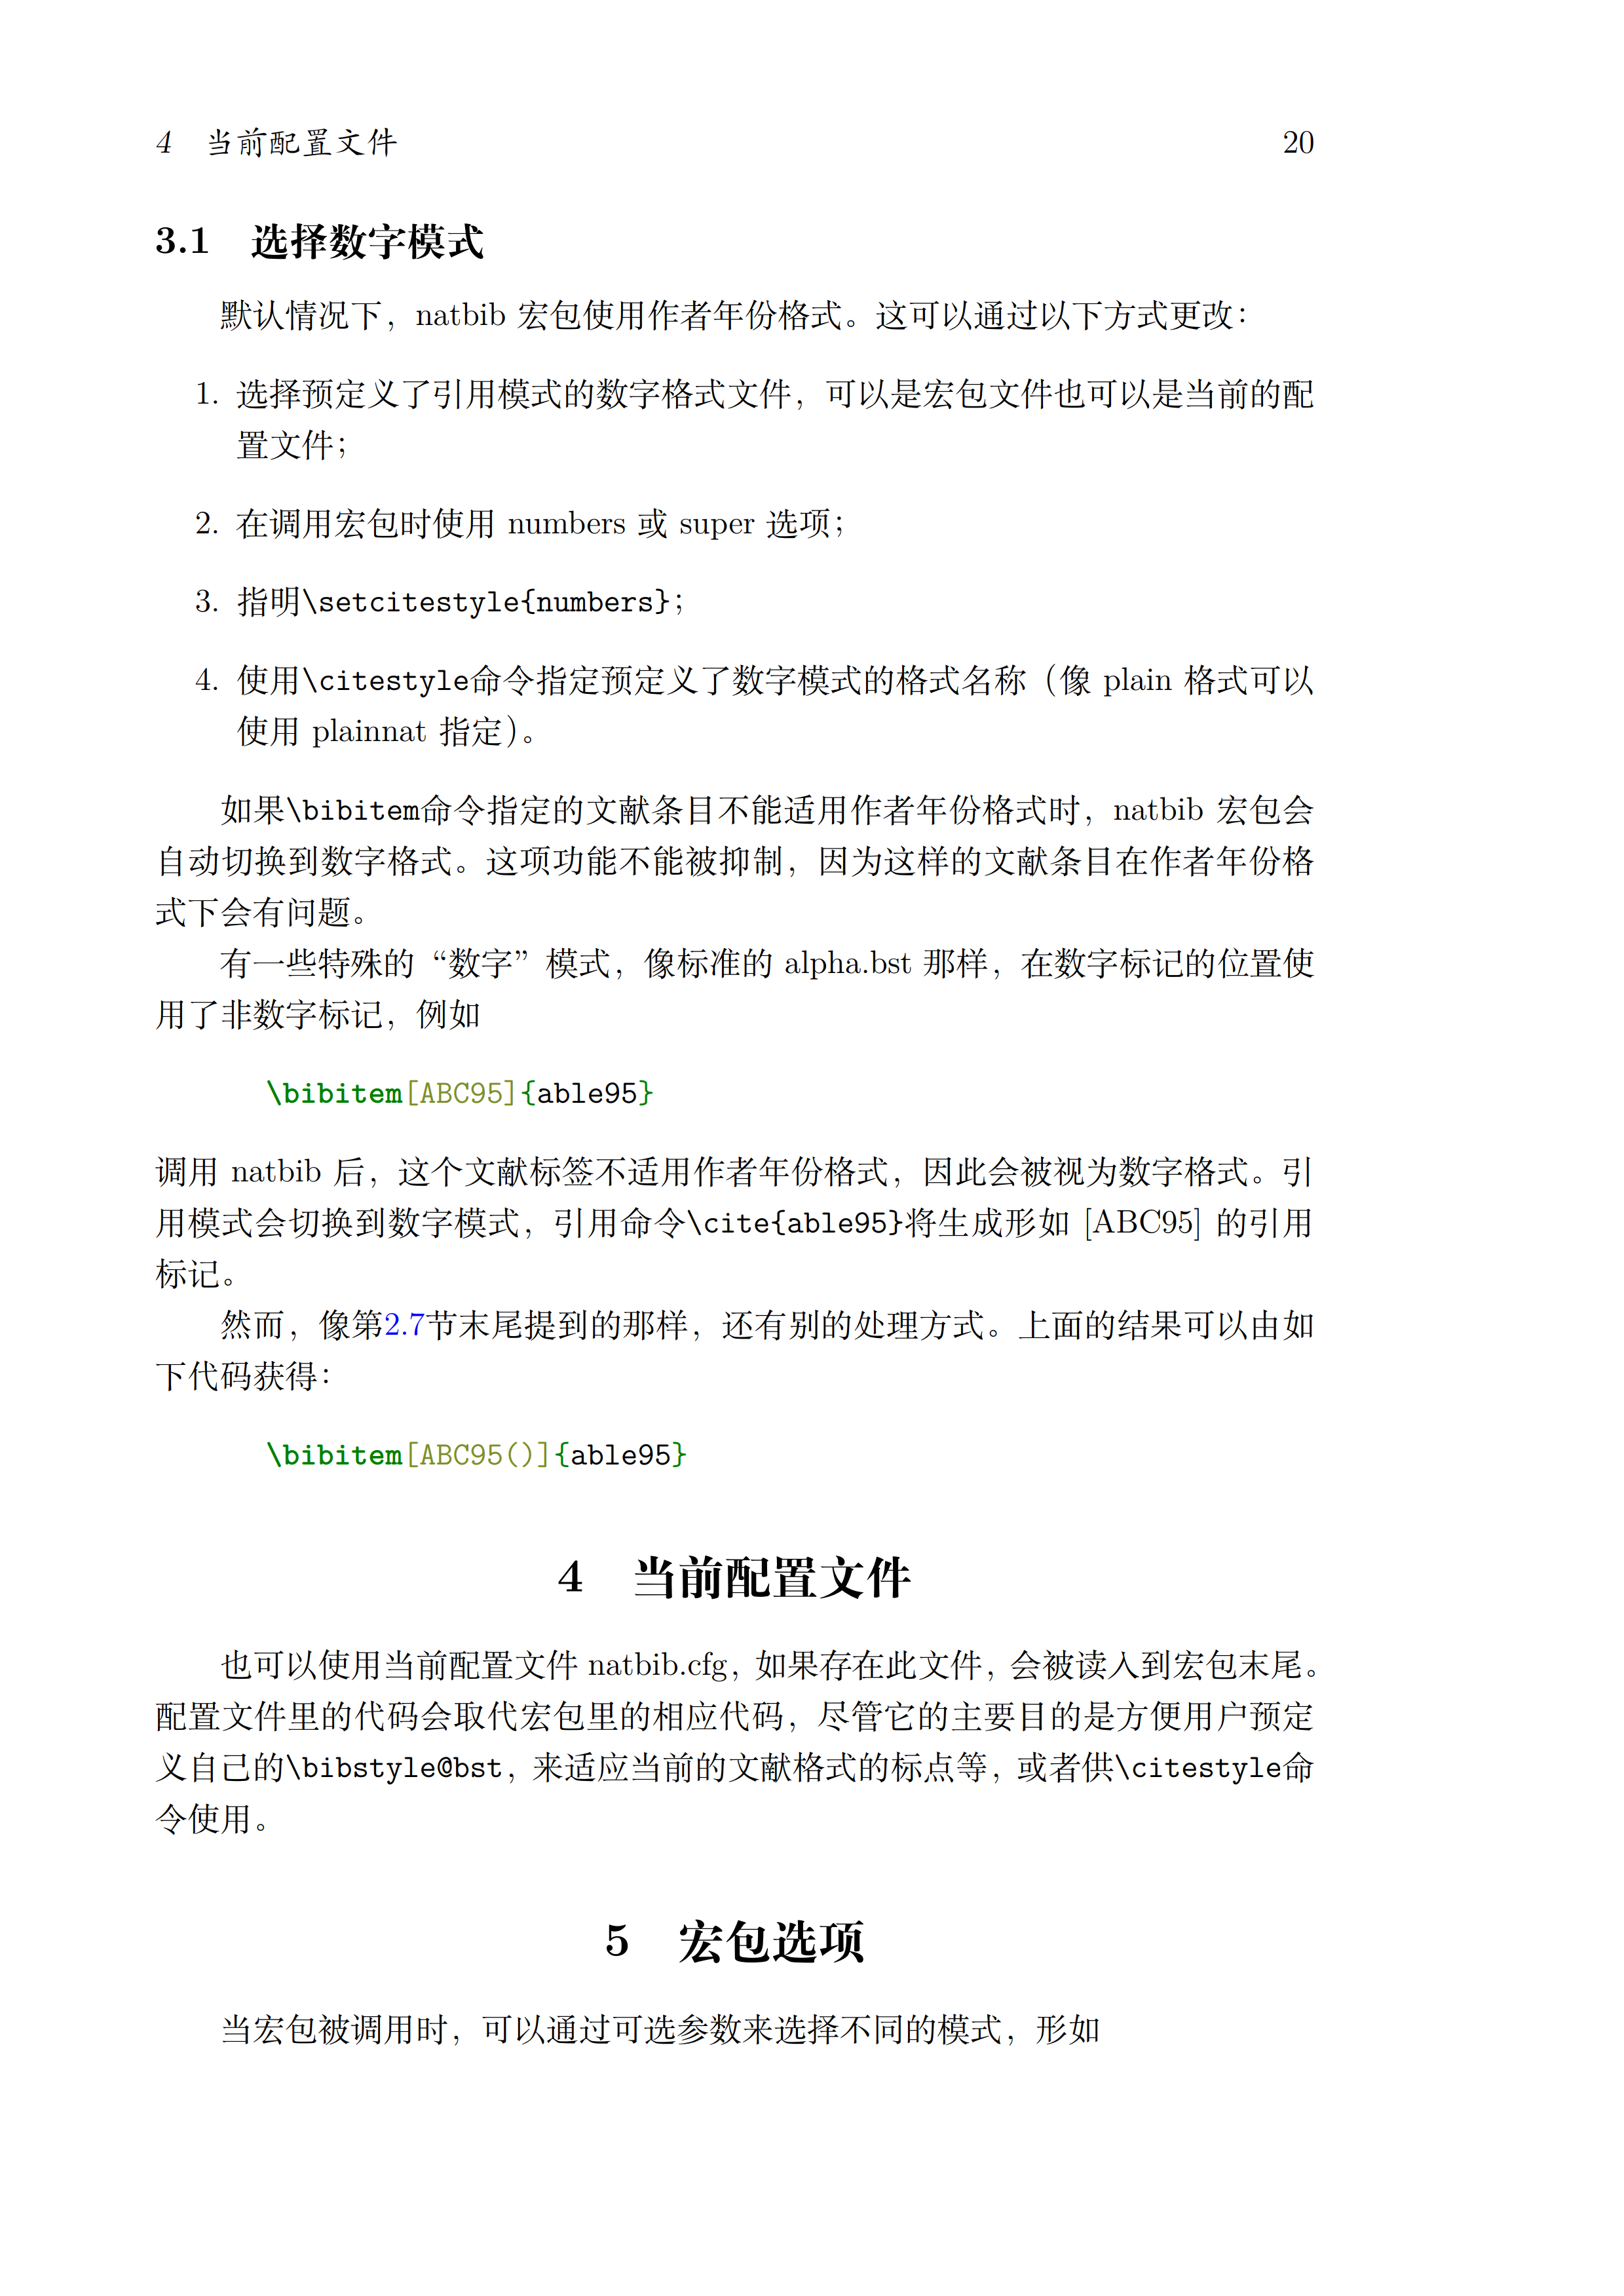 natbib 宏包说明文档中文翻译 -  含源代码